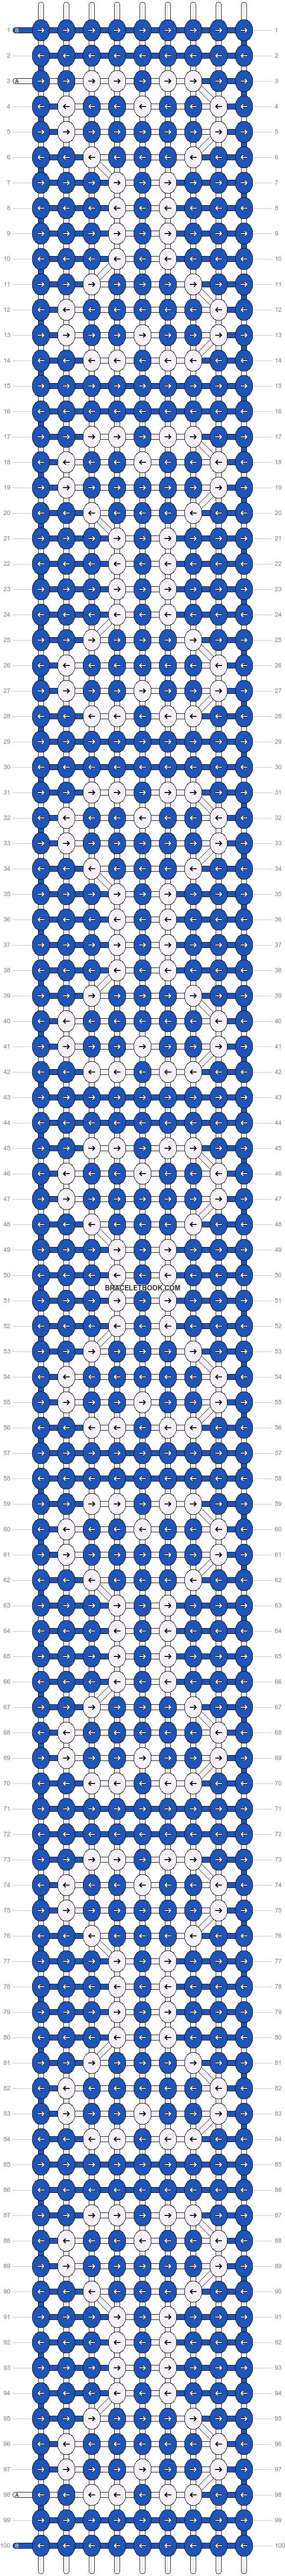 Alpha pattern #48735 pattern